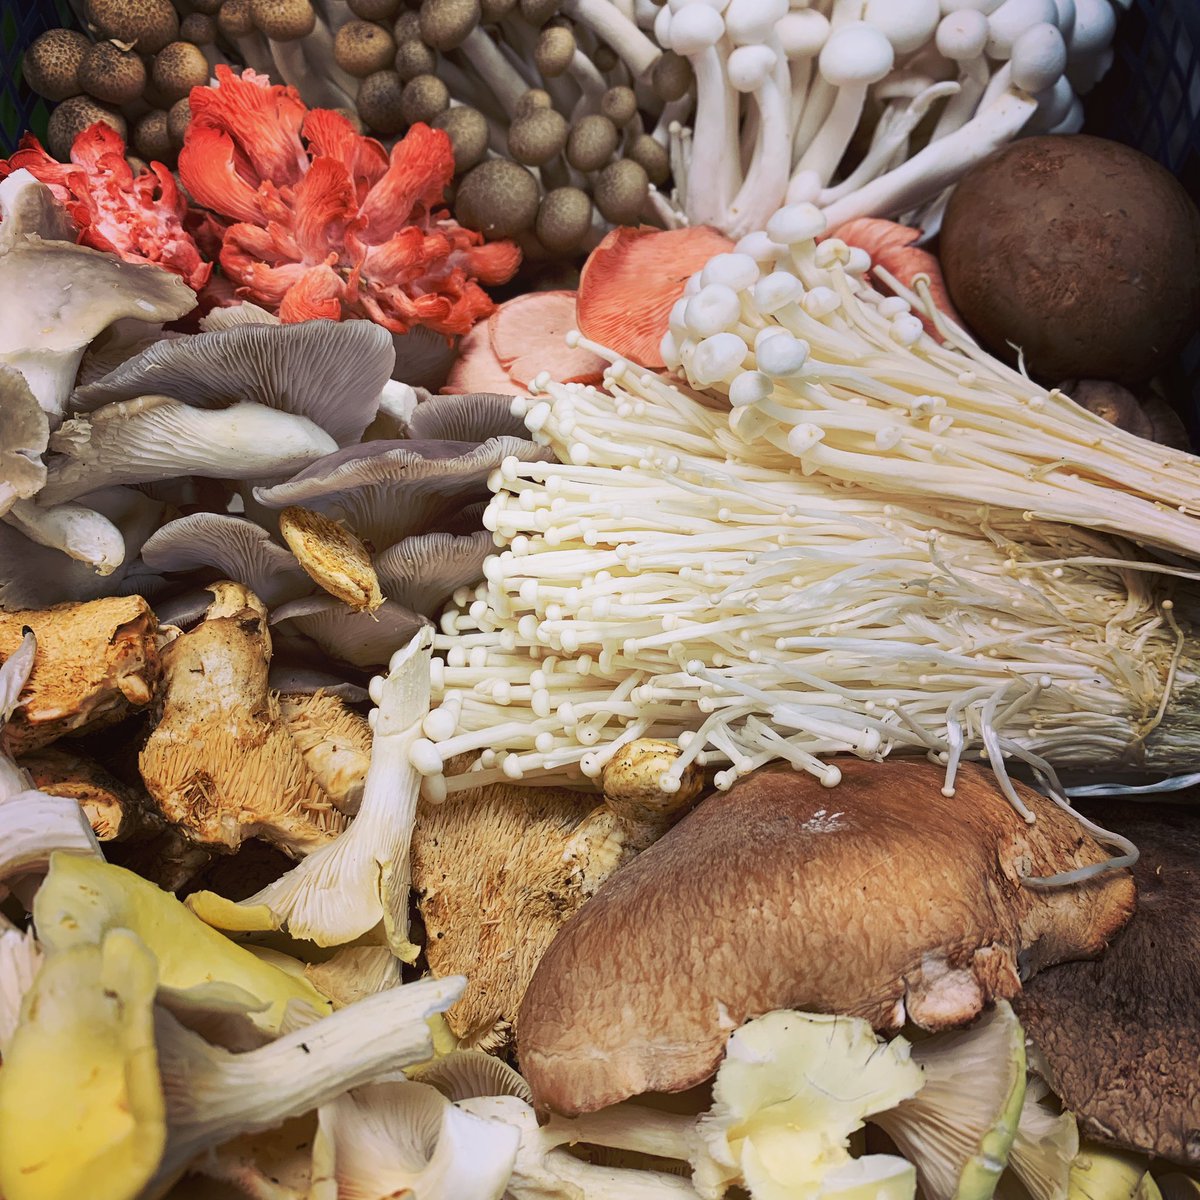 We’re so proud of our seasonal selection of exotic mushrooms at Hoole Food Market.

#Mushrooms
#WildMushrooms
#ExoticMushrooms
#PinkOyster
#YellowOyster
#GreyOyster
#KingOyster
#Enoki
#WhiteShimeji
#BrownShimeji
#PiedDuMouton
#Shiitake
#Portabello
#Eryngi

#Hoole
#Chester